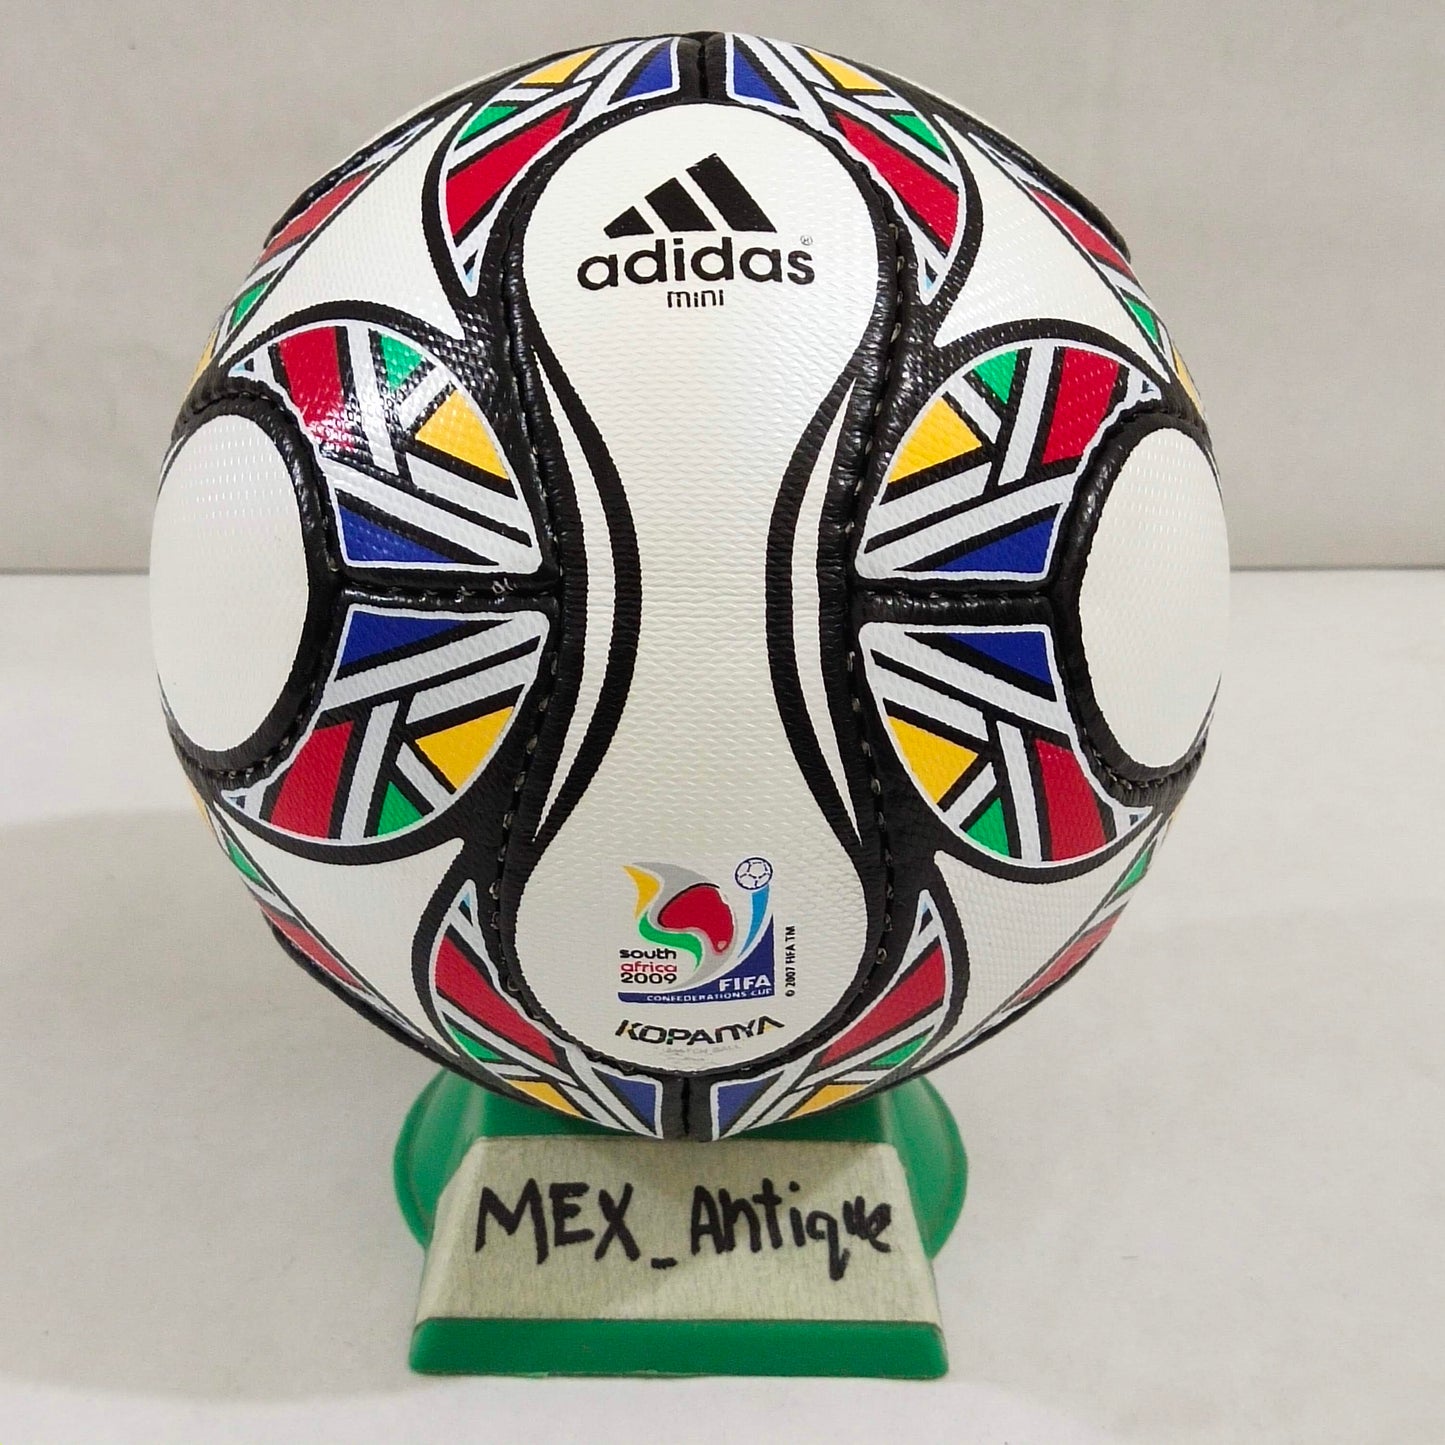 Adidas Kopanya Mini | FIFA Confederations Cup 2009 | Mini Ball 01